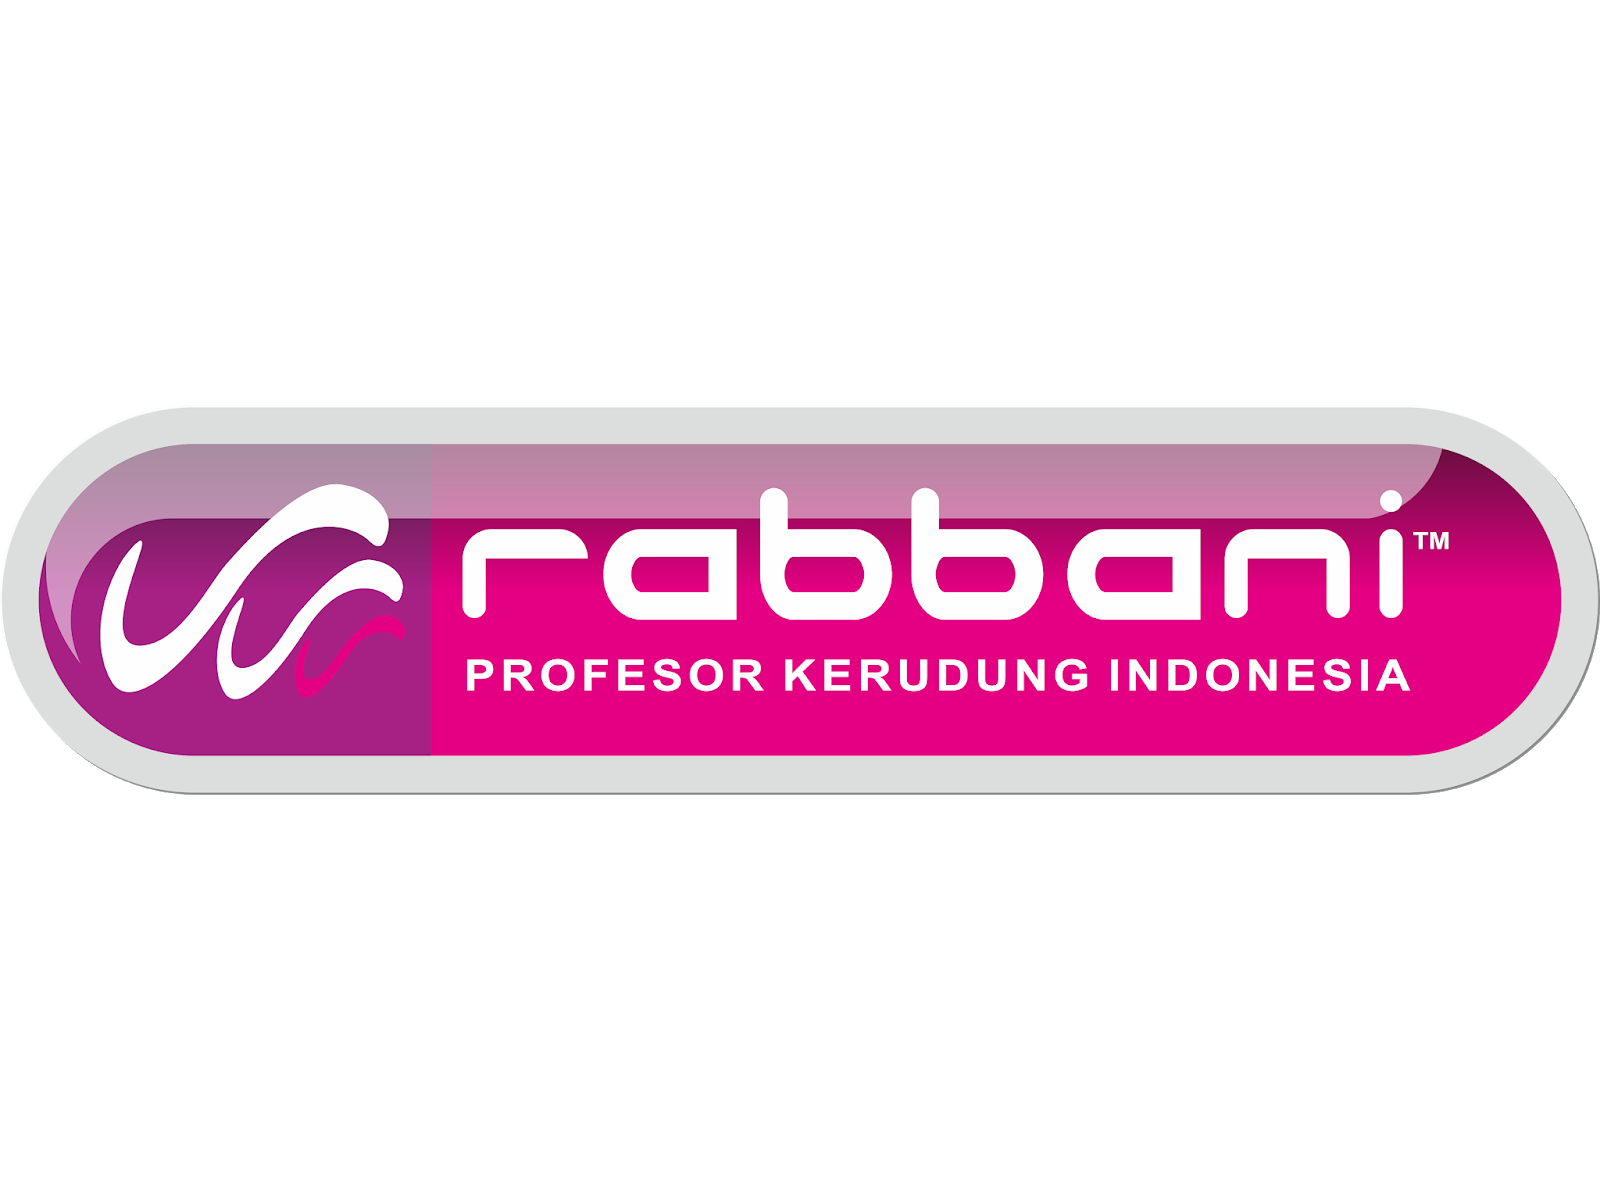 Vector Logo Rabbani Format Png Cdr Svg Ai